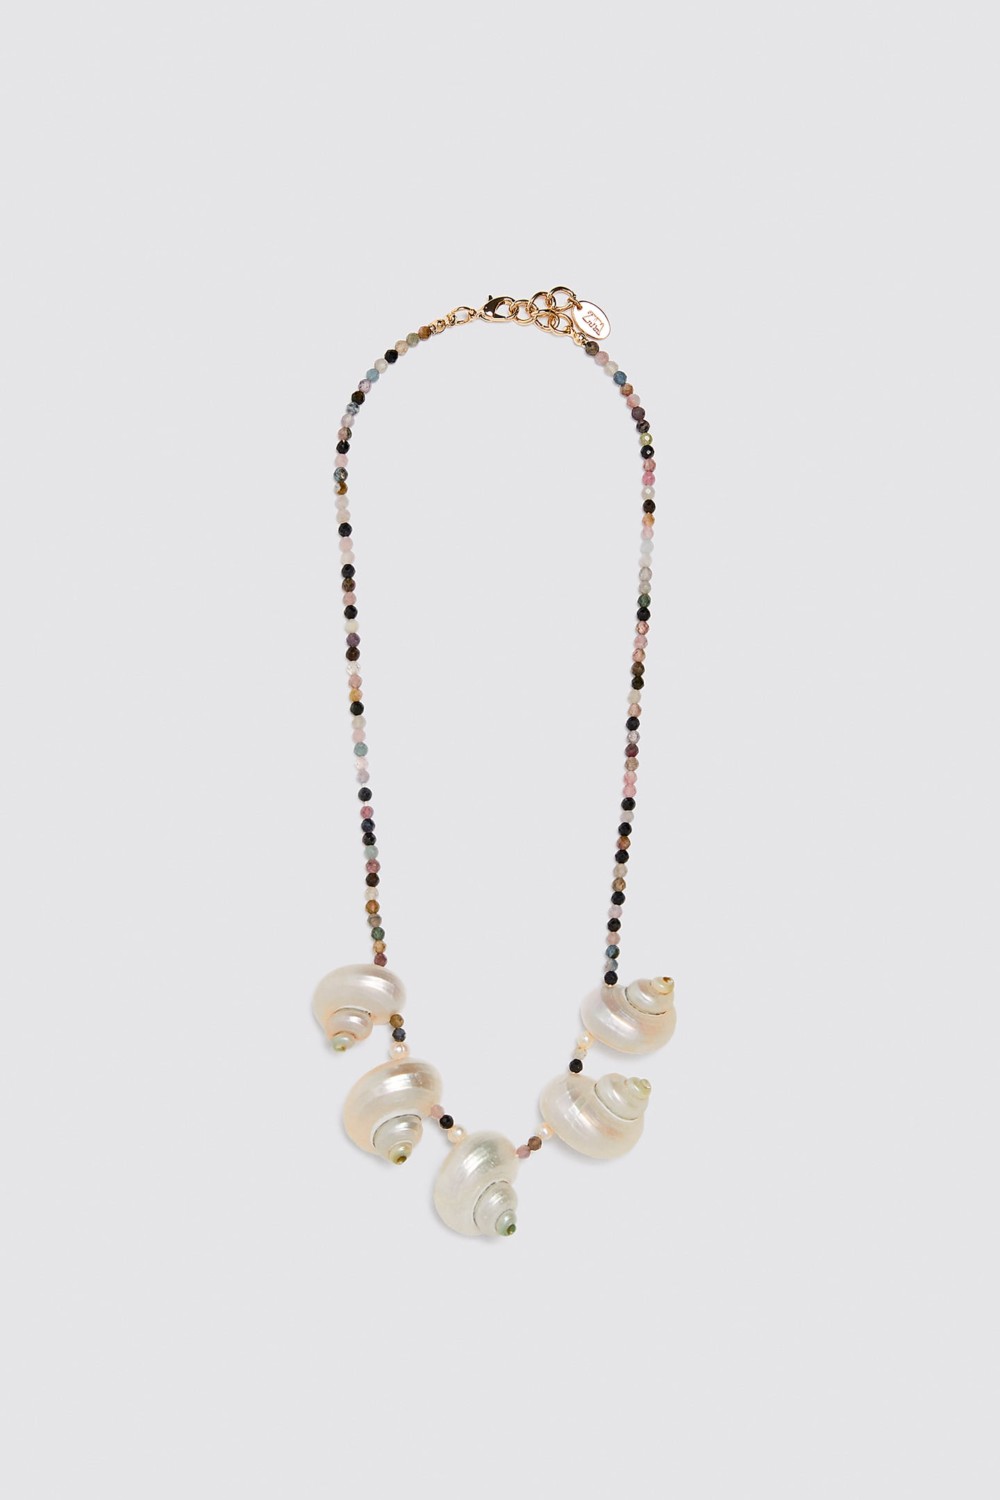 Fashion Blog Mode Tendance Ete 2020 Bijou Jewelry Zara Necklace Collier Coquillage Shell Couleurs Colors Pierres Stones